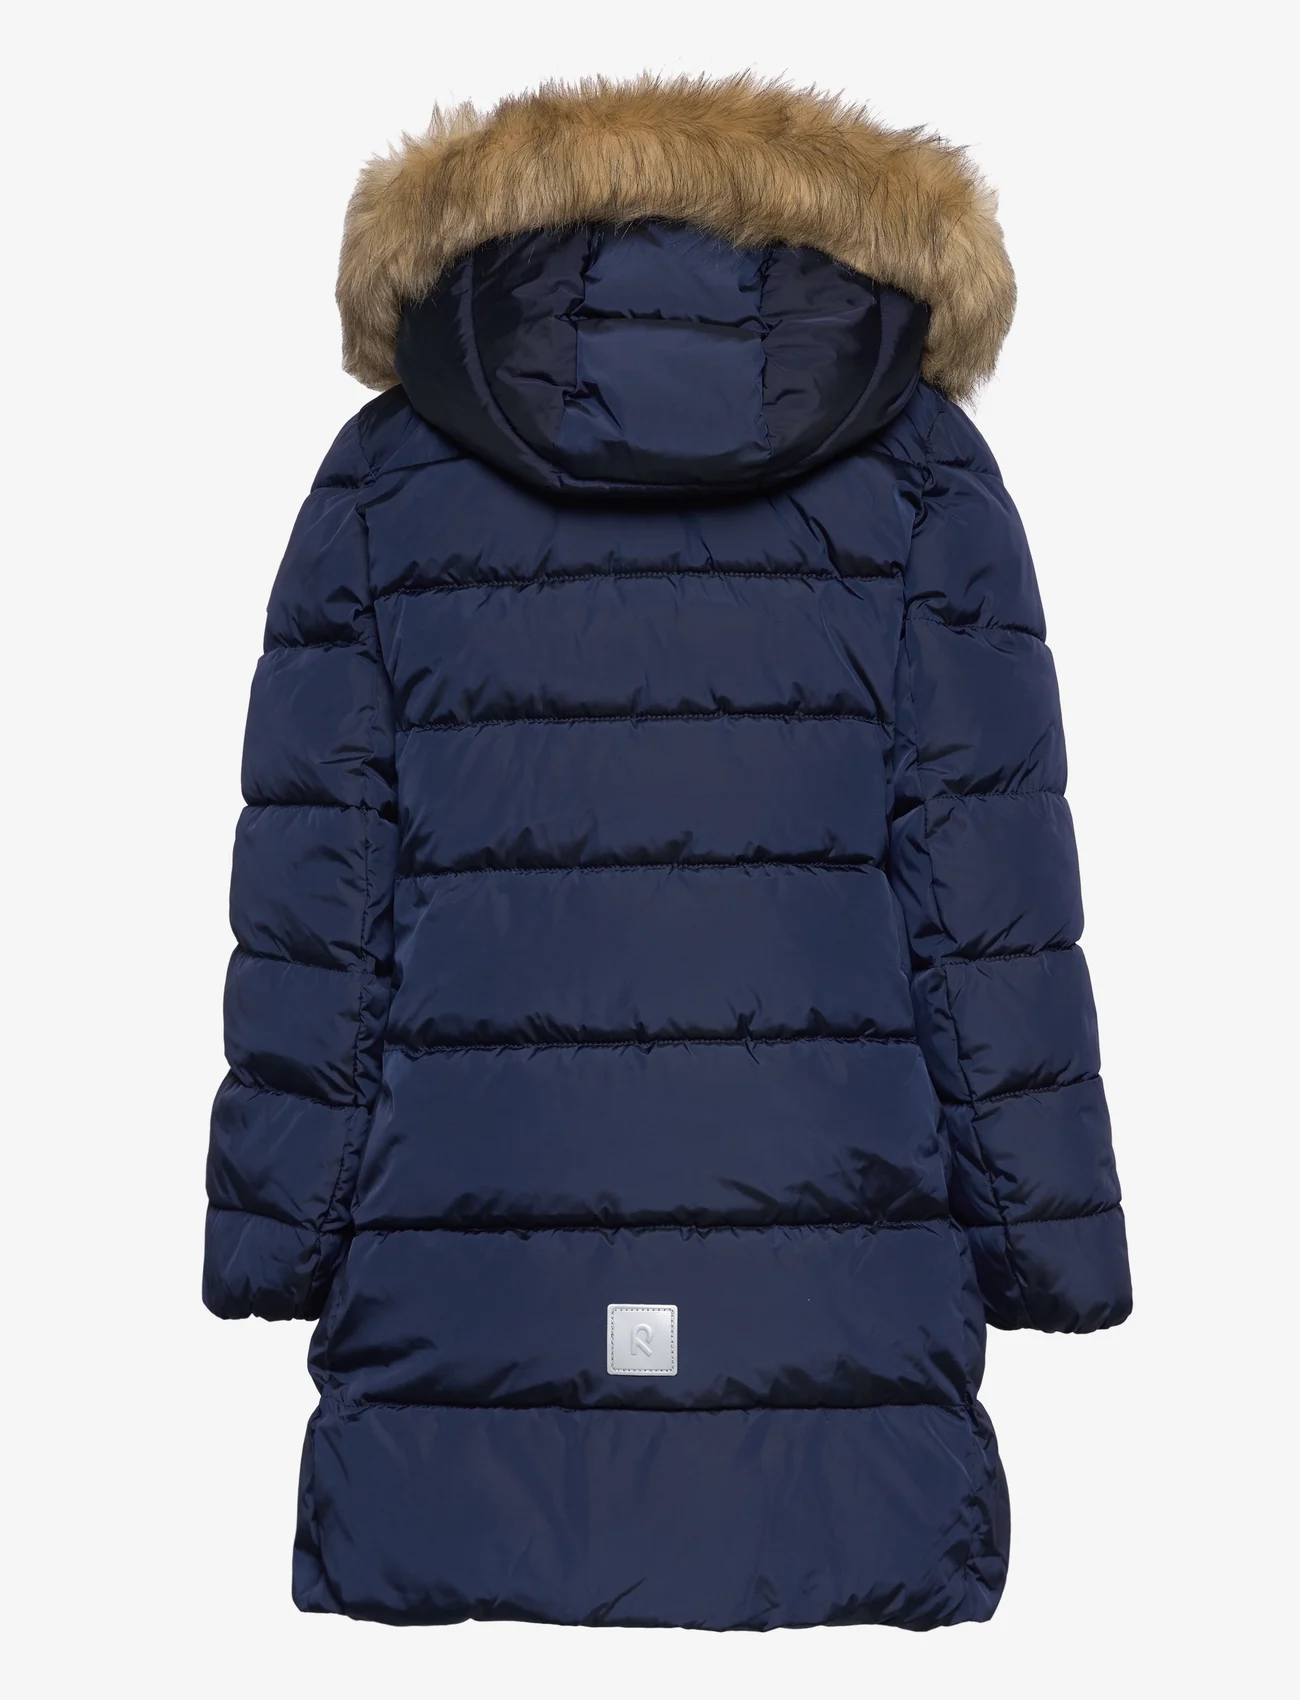 Reima - Winter jacket, Lunta - winter jackets - navy - 1